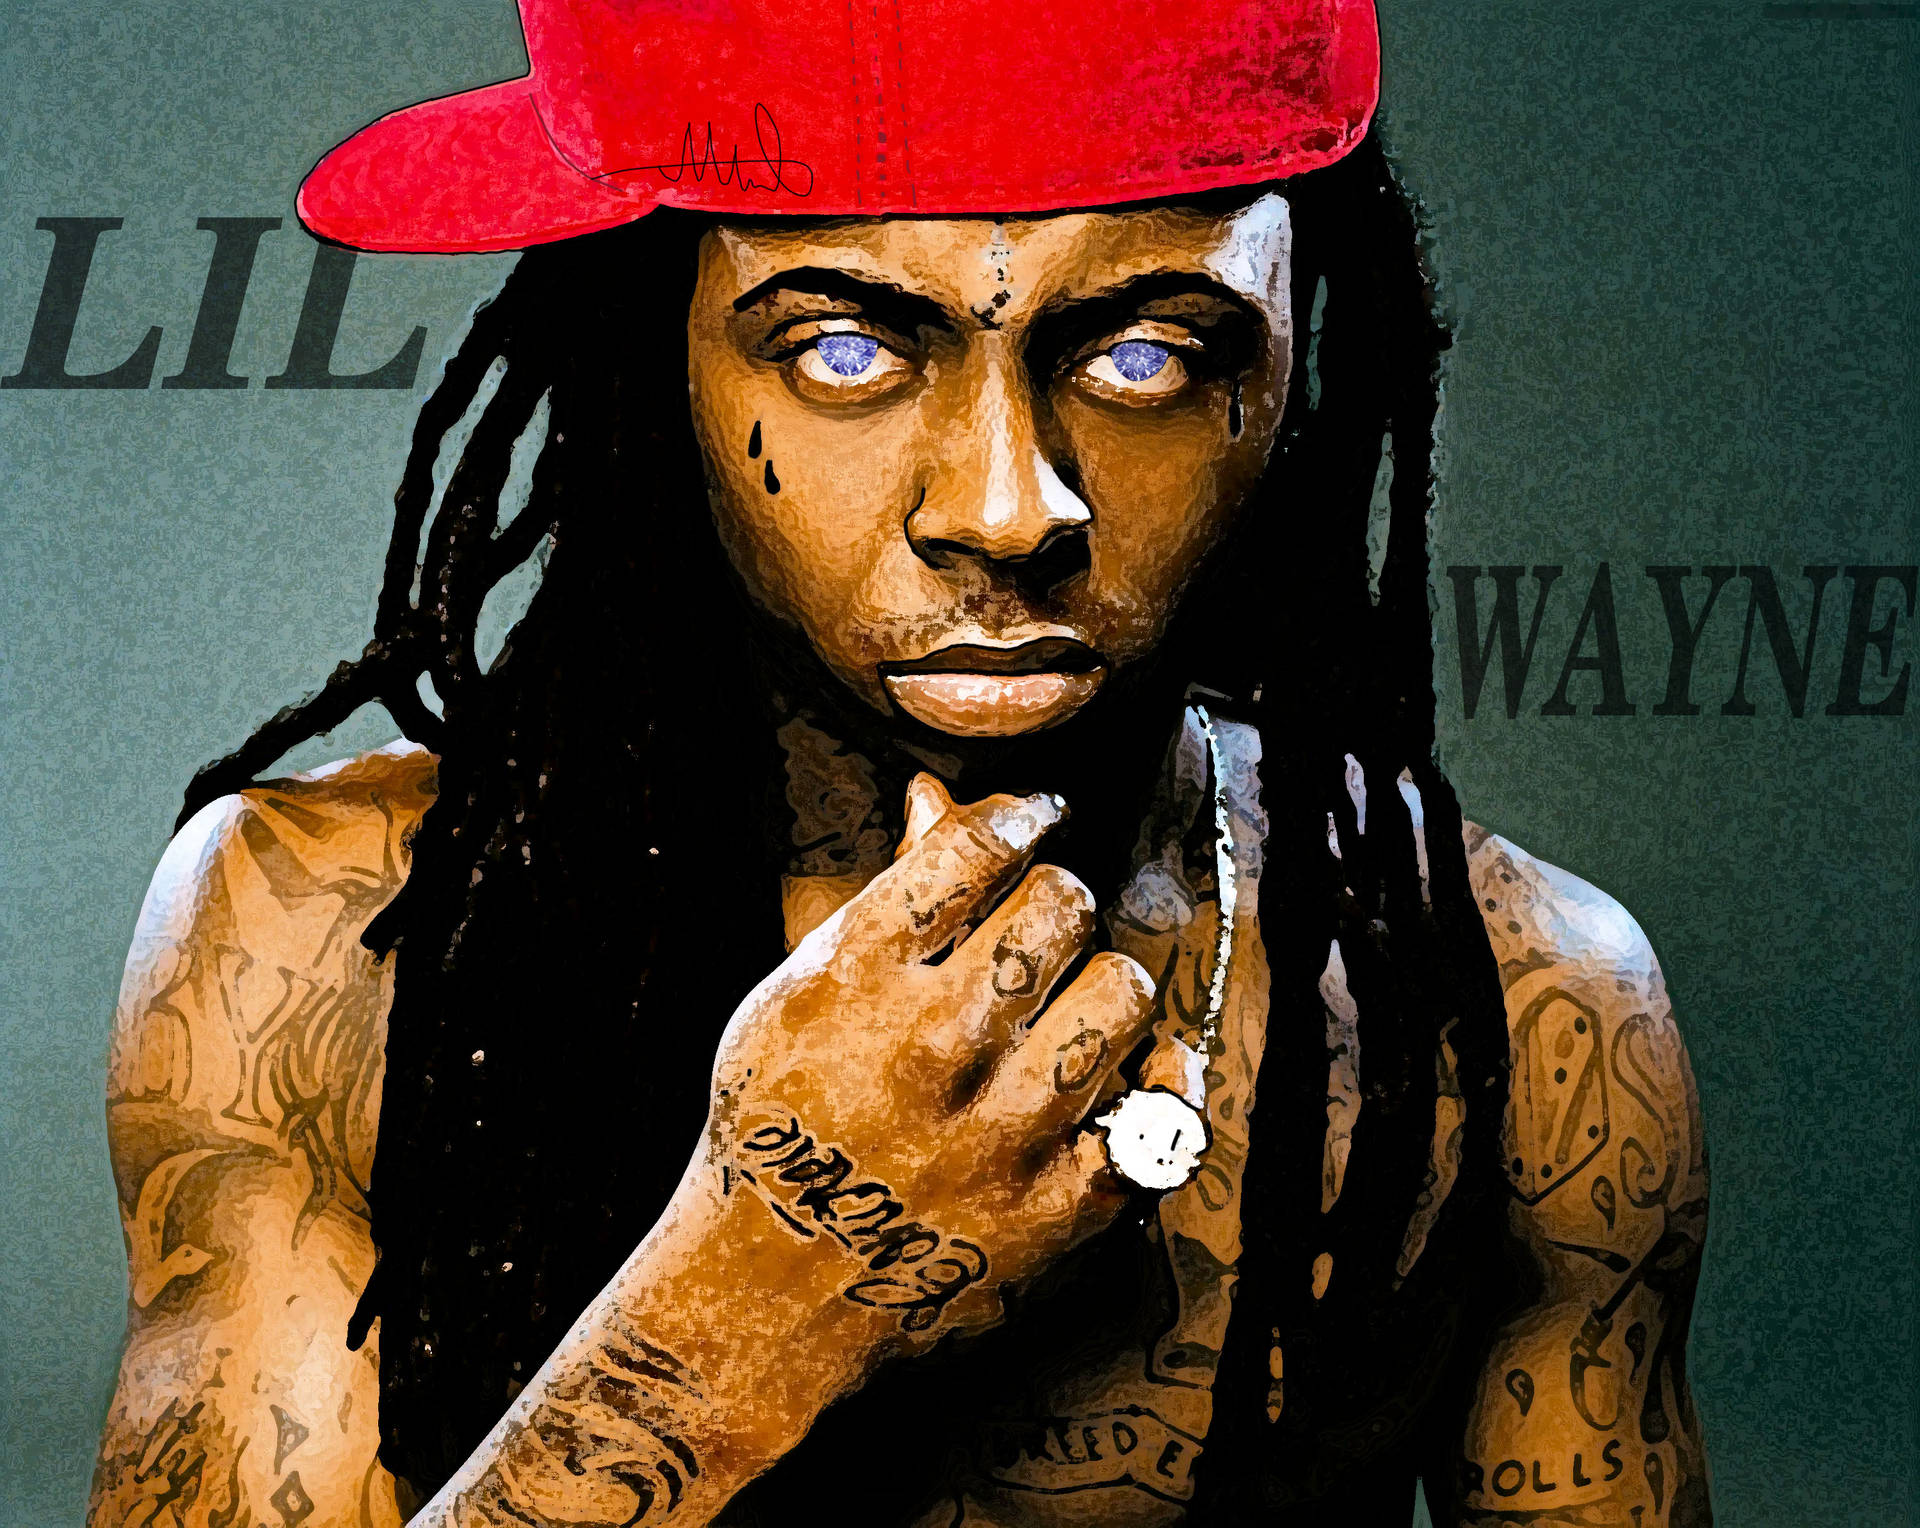 Lil Wayne Digital Art Wallpaper